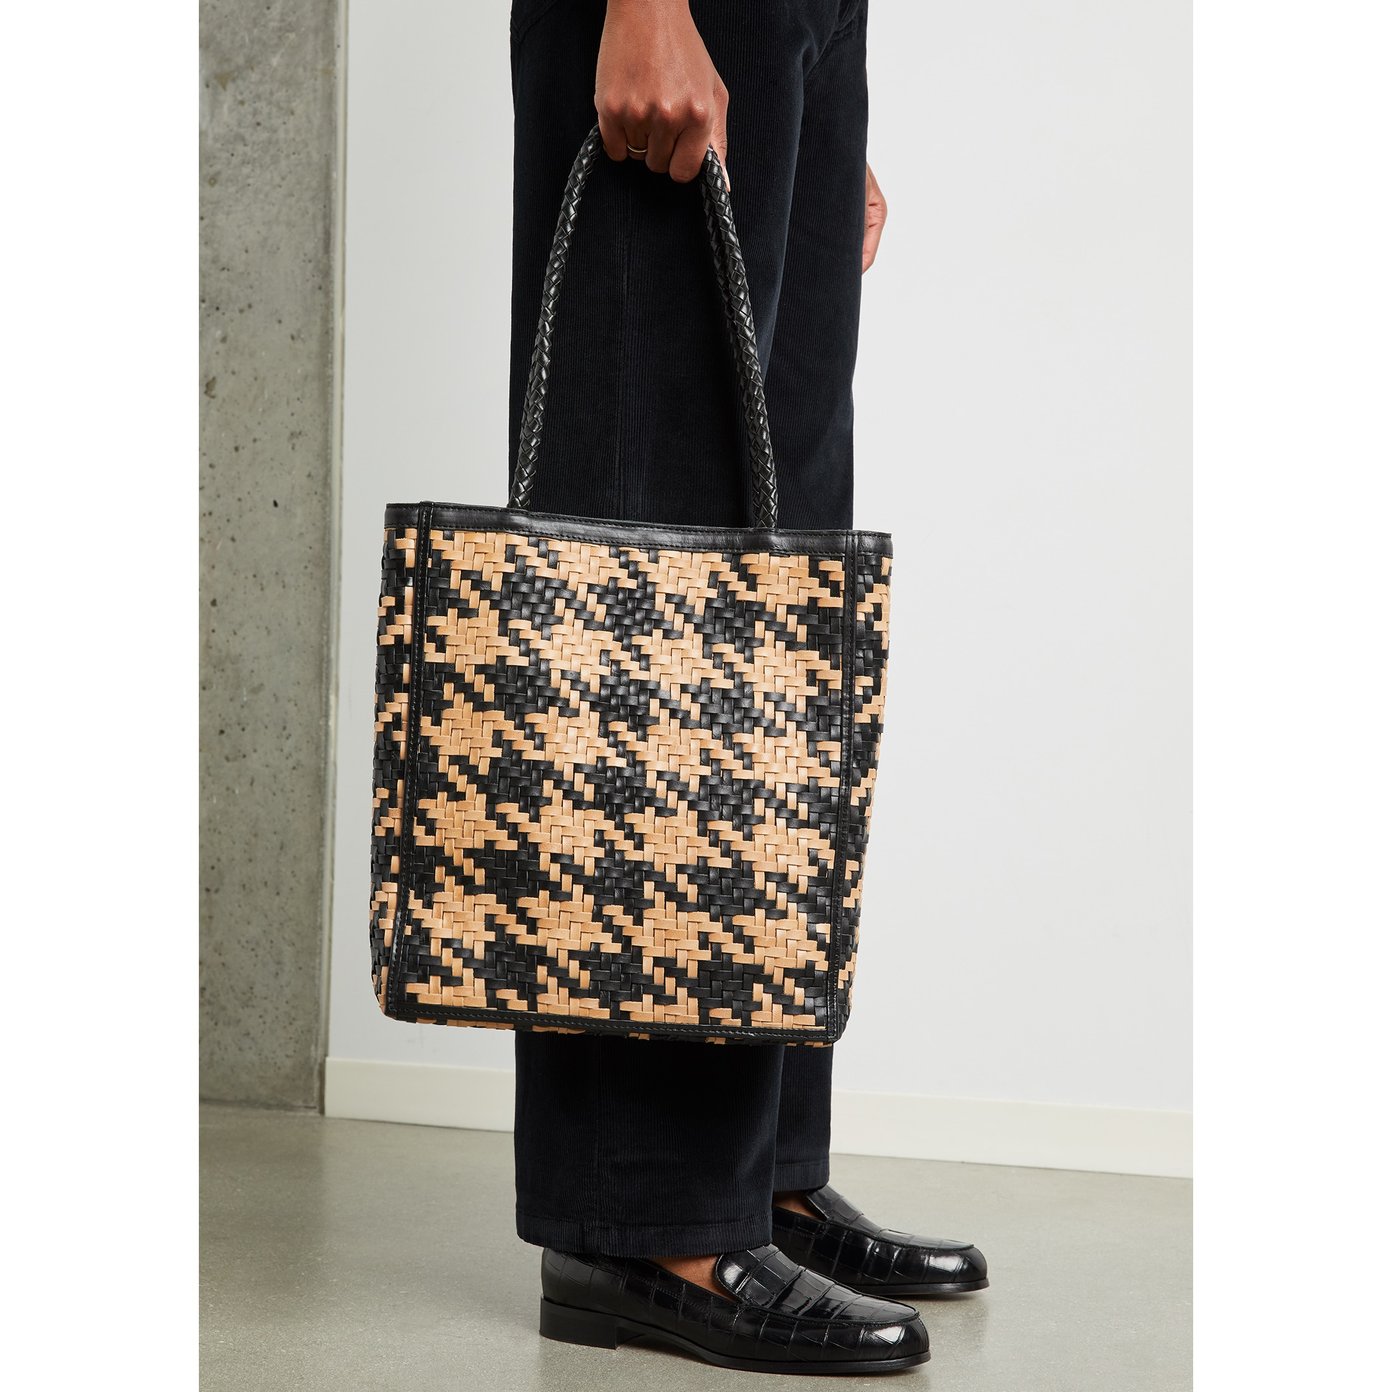 369 Louis Vuitton Shopping Bags Stock Photos - Free & Royalty-Free